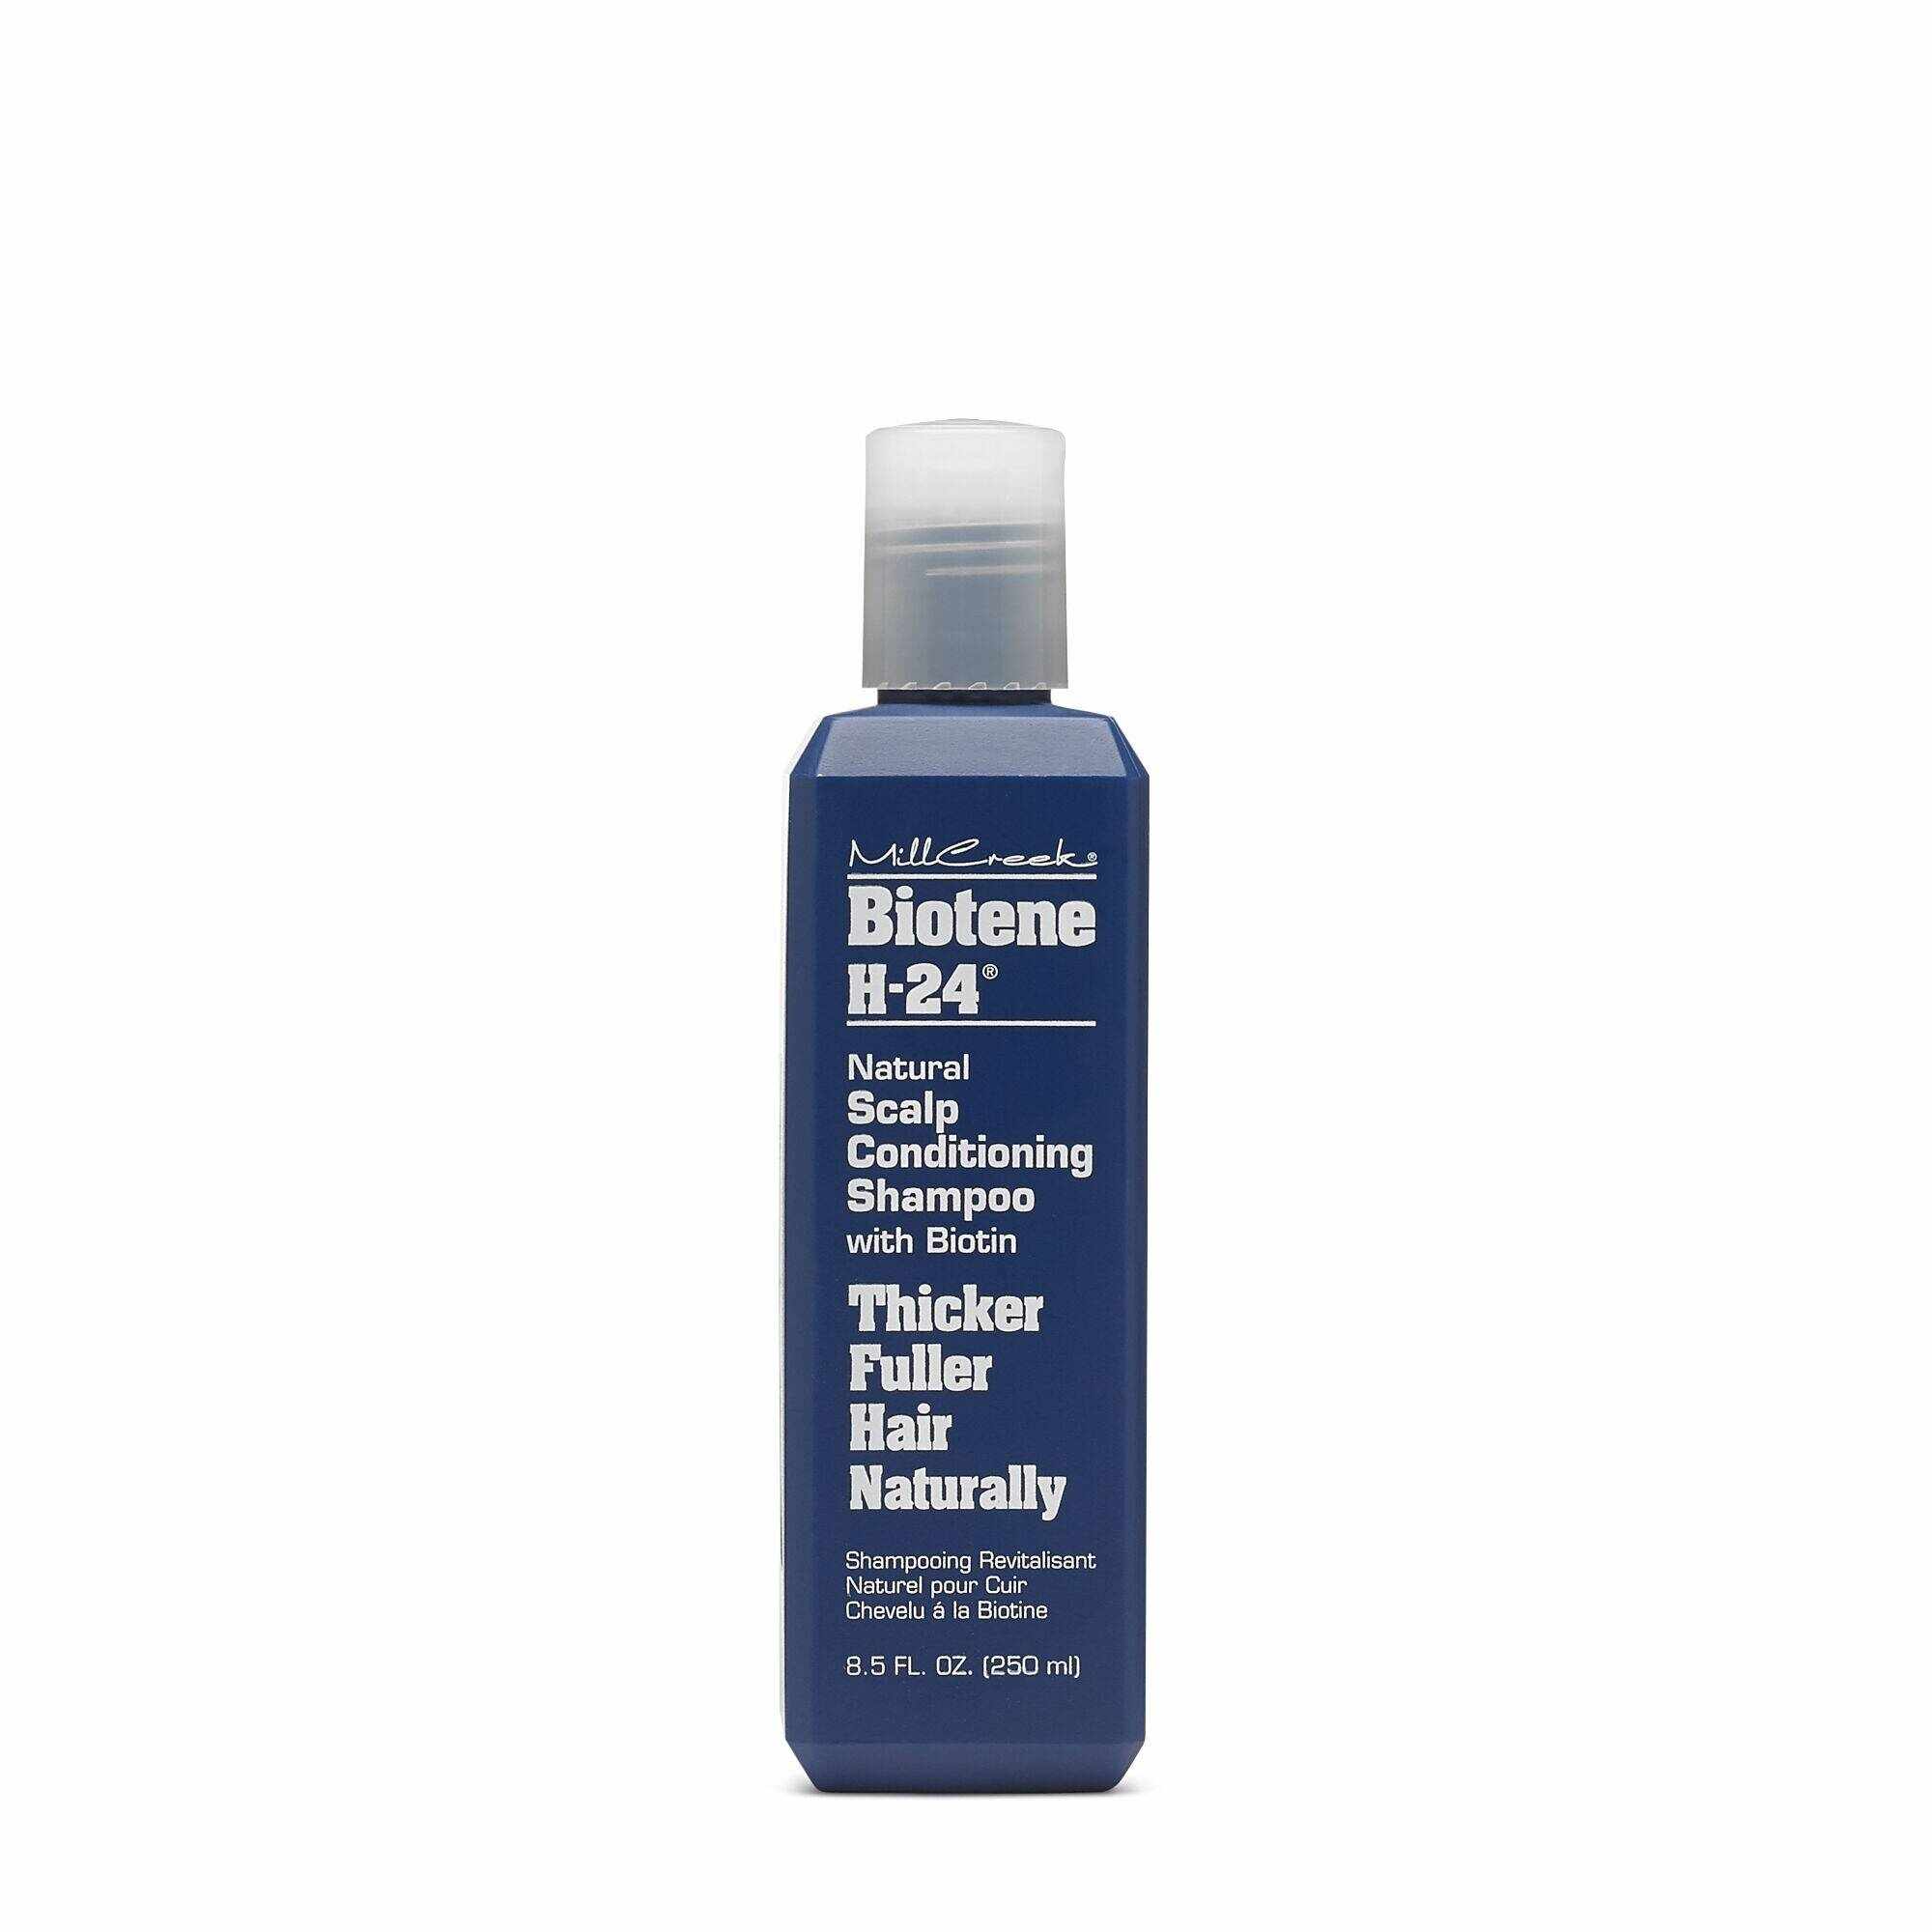 Mill creek botanicals biotene h-24 scalp conditioning shampoo with biotin, sampon-balsam natural cu biotina, 250ml - Gnc